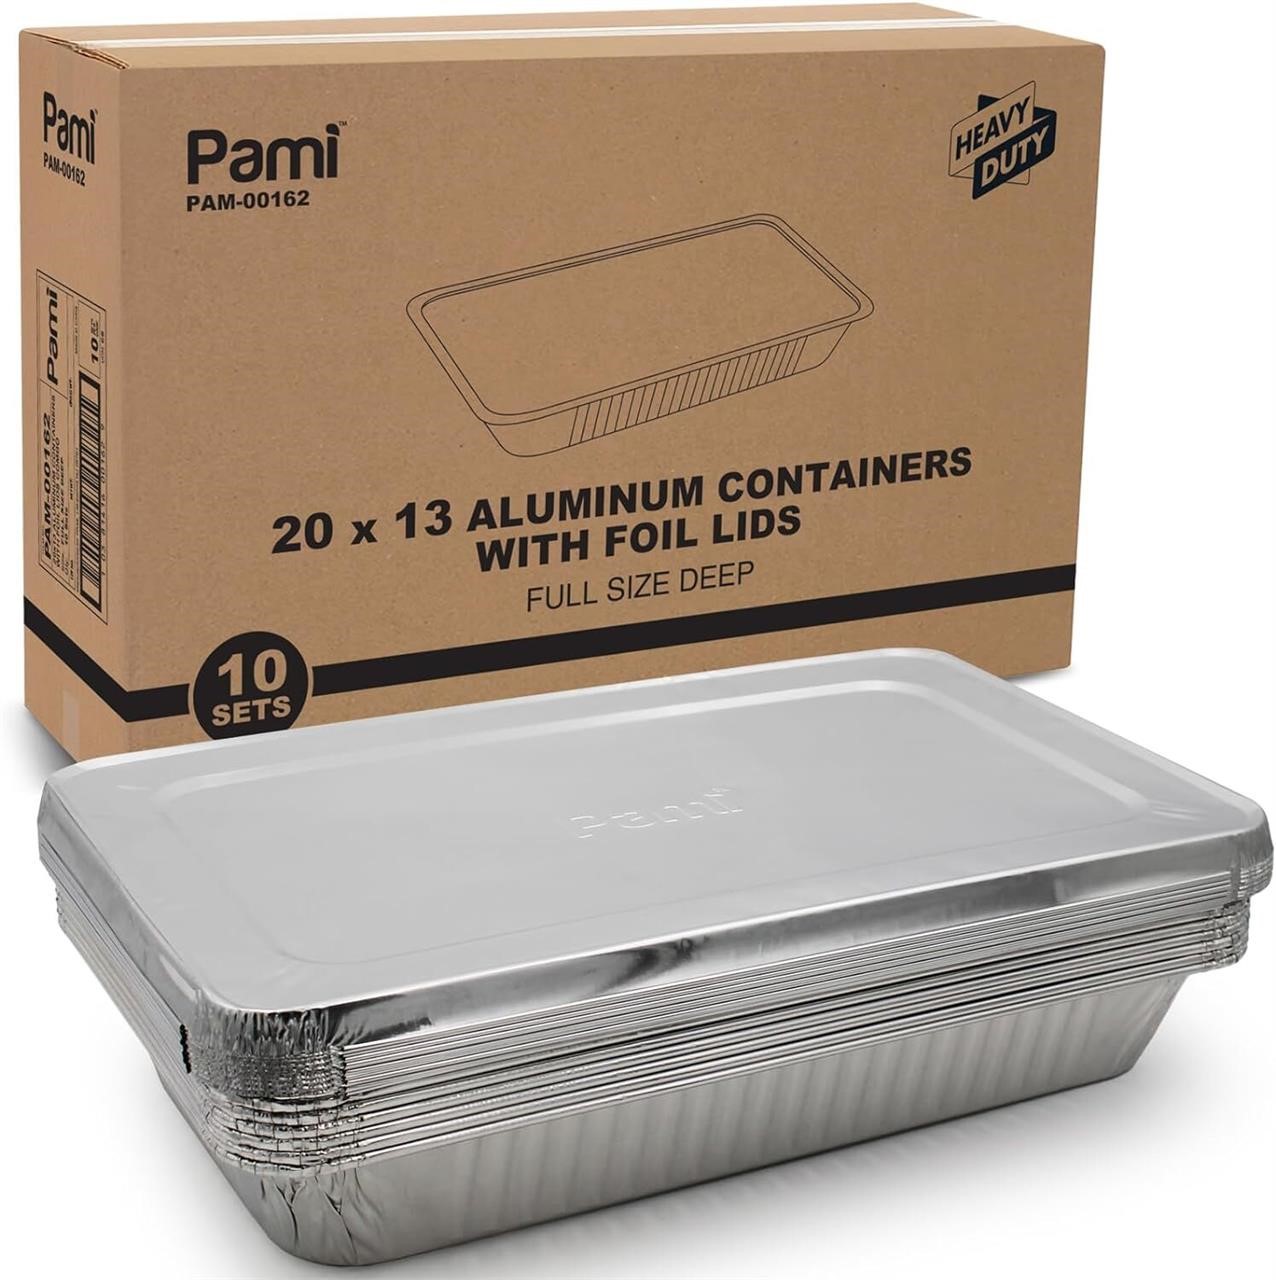 $35  PAMI Alum Pans  Full-Size  20x13